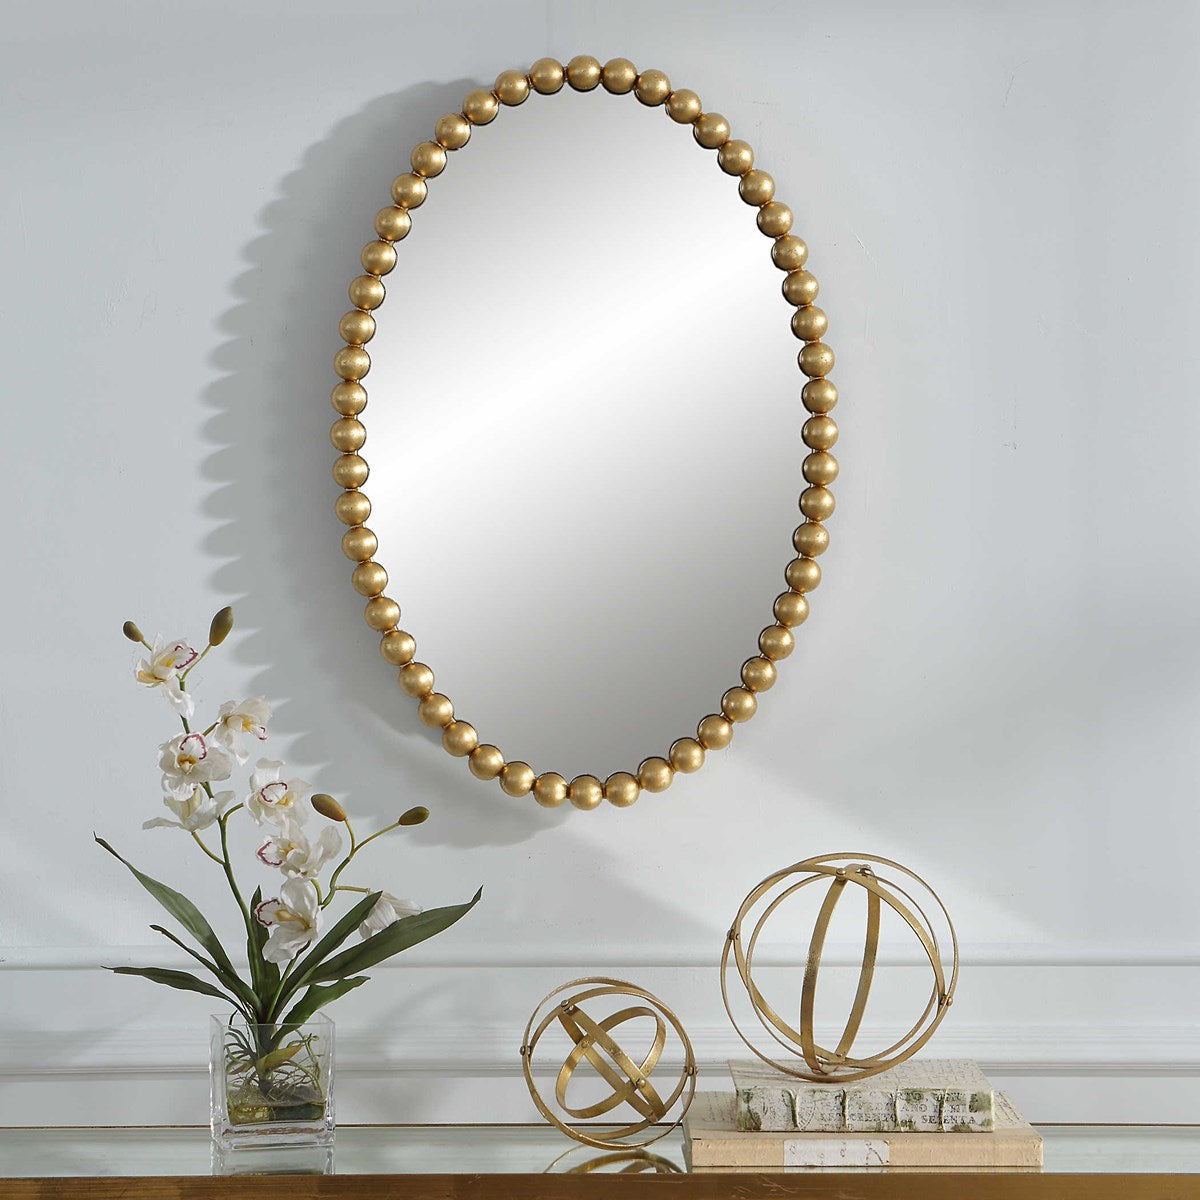 Serna Oval Mirror, Gold